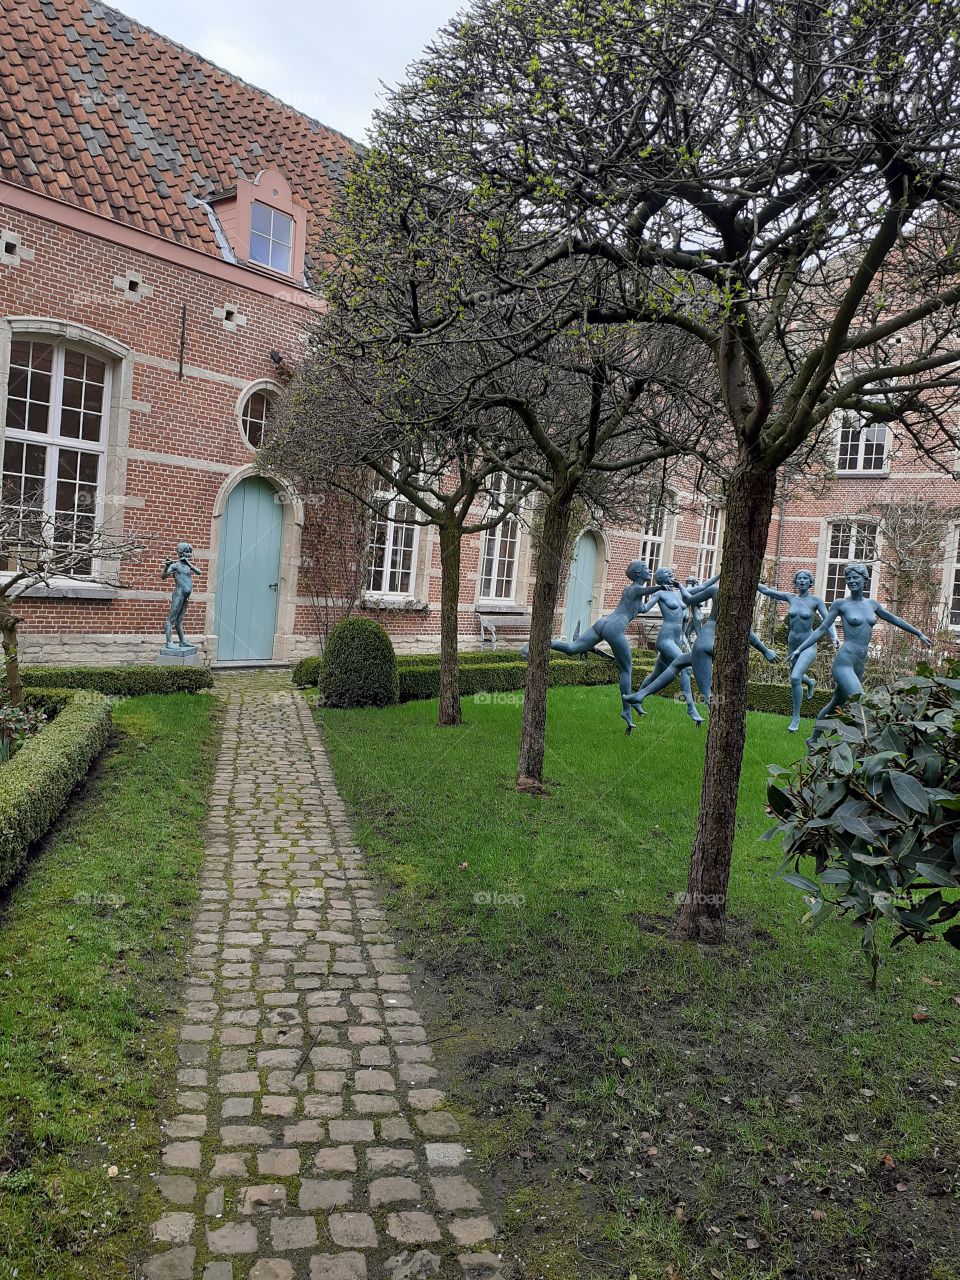 statues in a garden of an old house in Mechelen Belgium